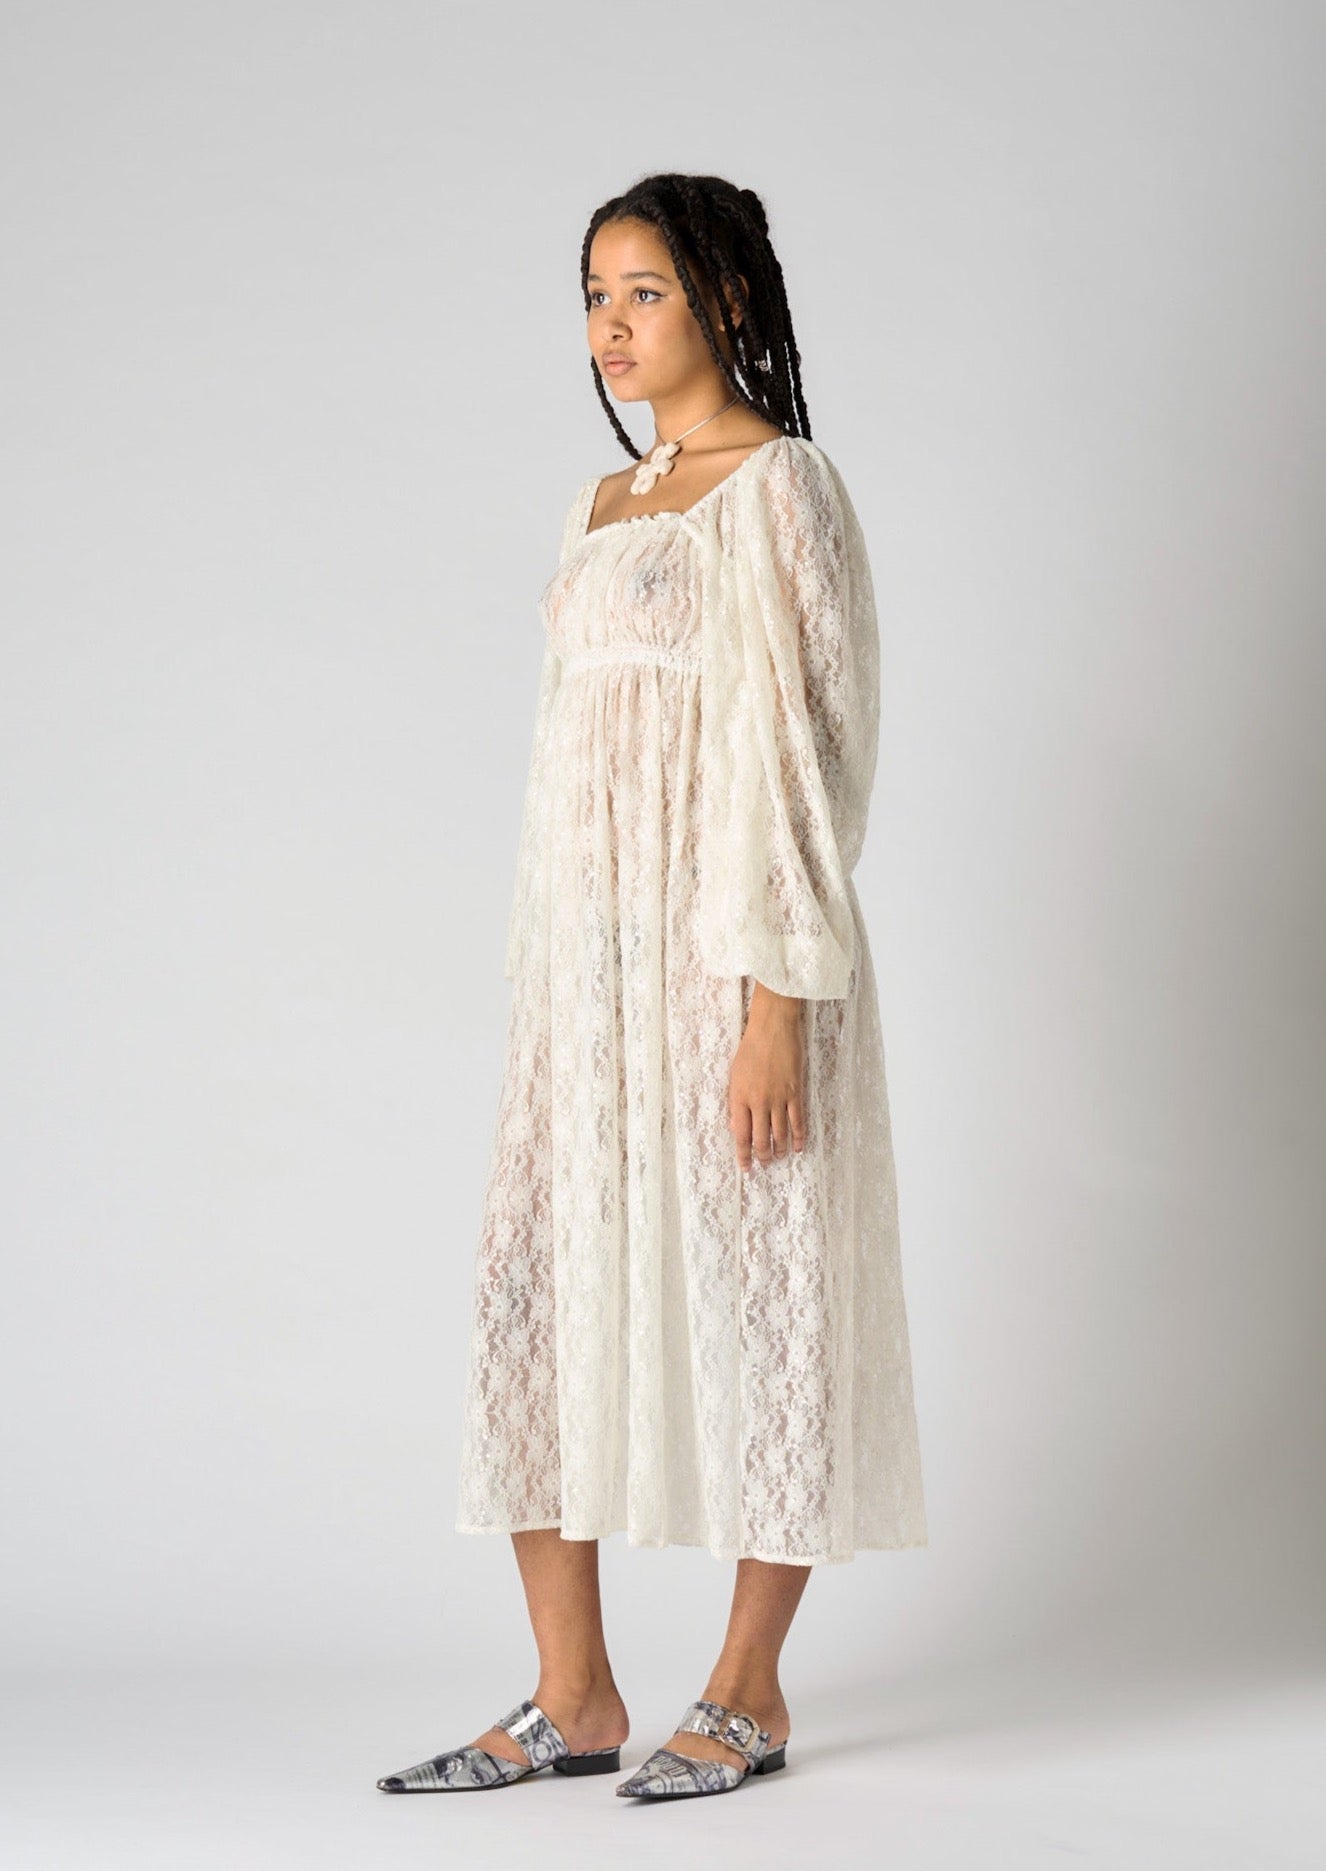 Sequin Lace Princess Dress - yilou